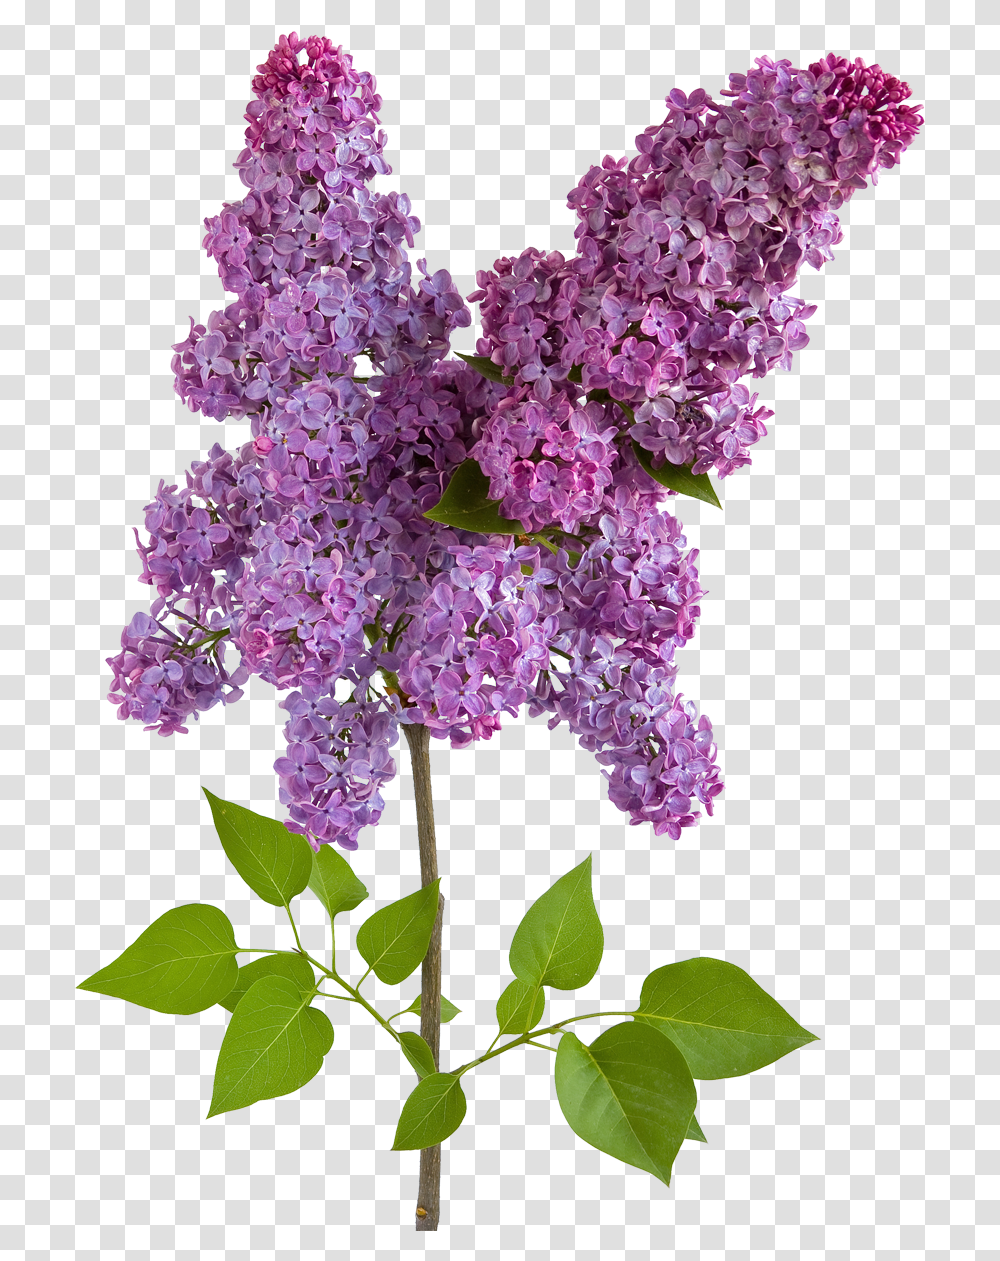 Lilac Flowers Images Free Download Wisteria Flower, Plant, Blossom, Bush, Vegetation Transparent Png